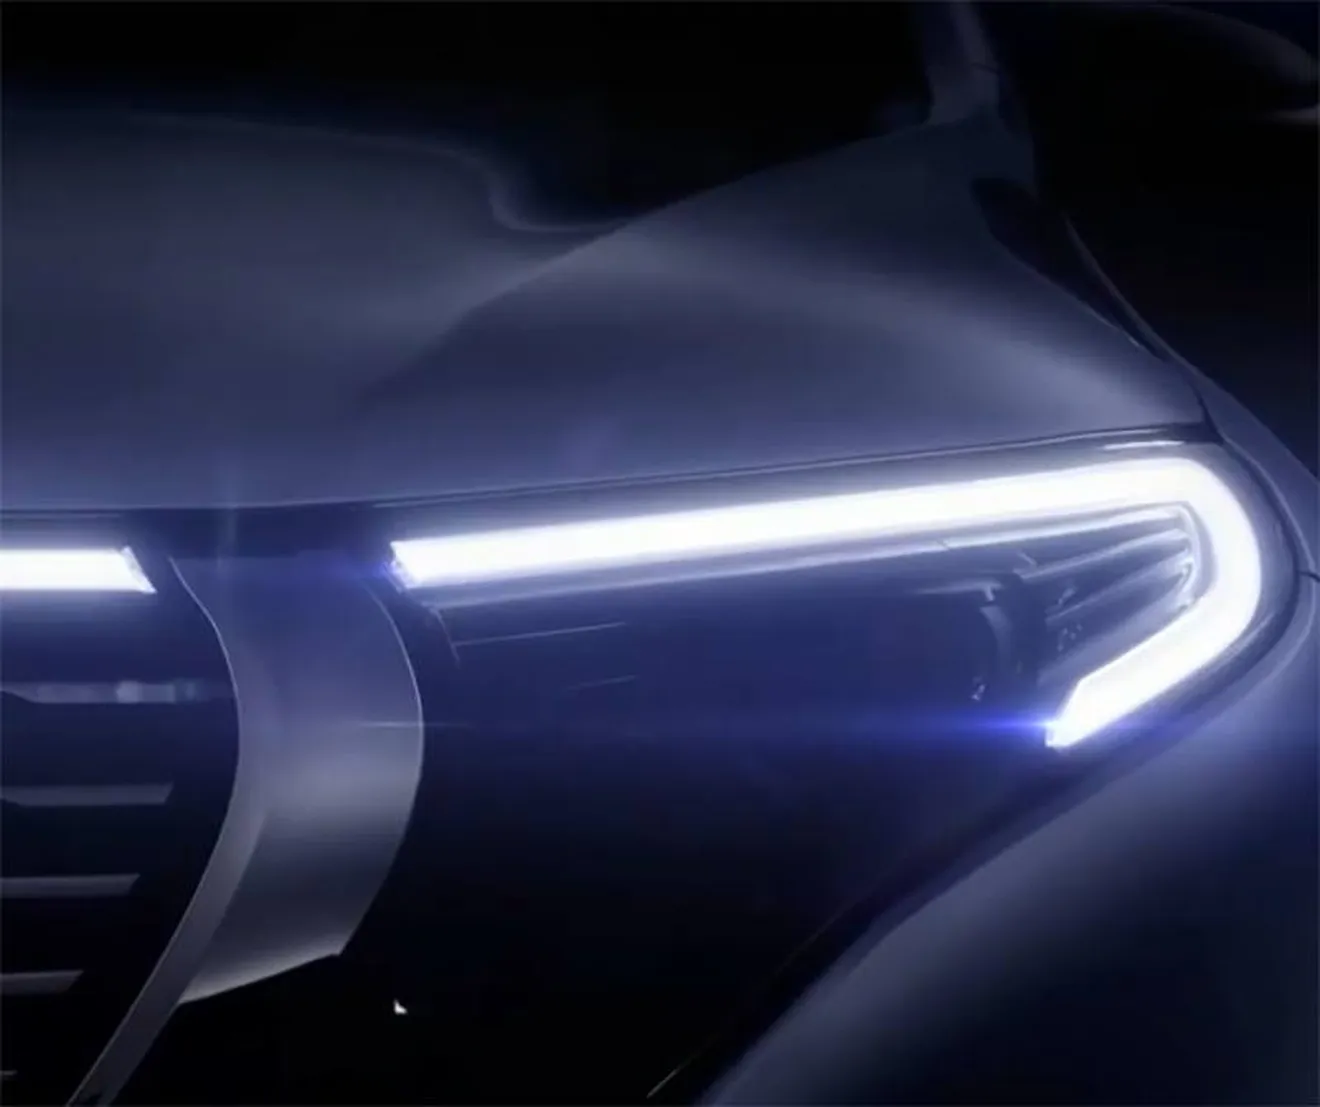 Mercedes avanza el primer teaser oficial del nuevo EQC